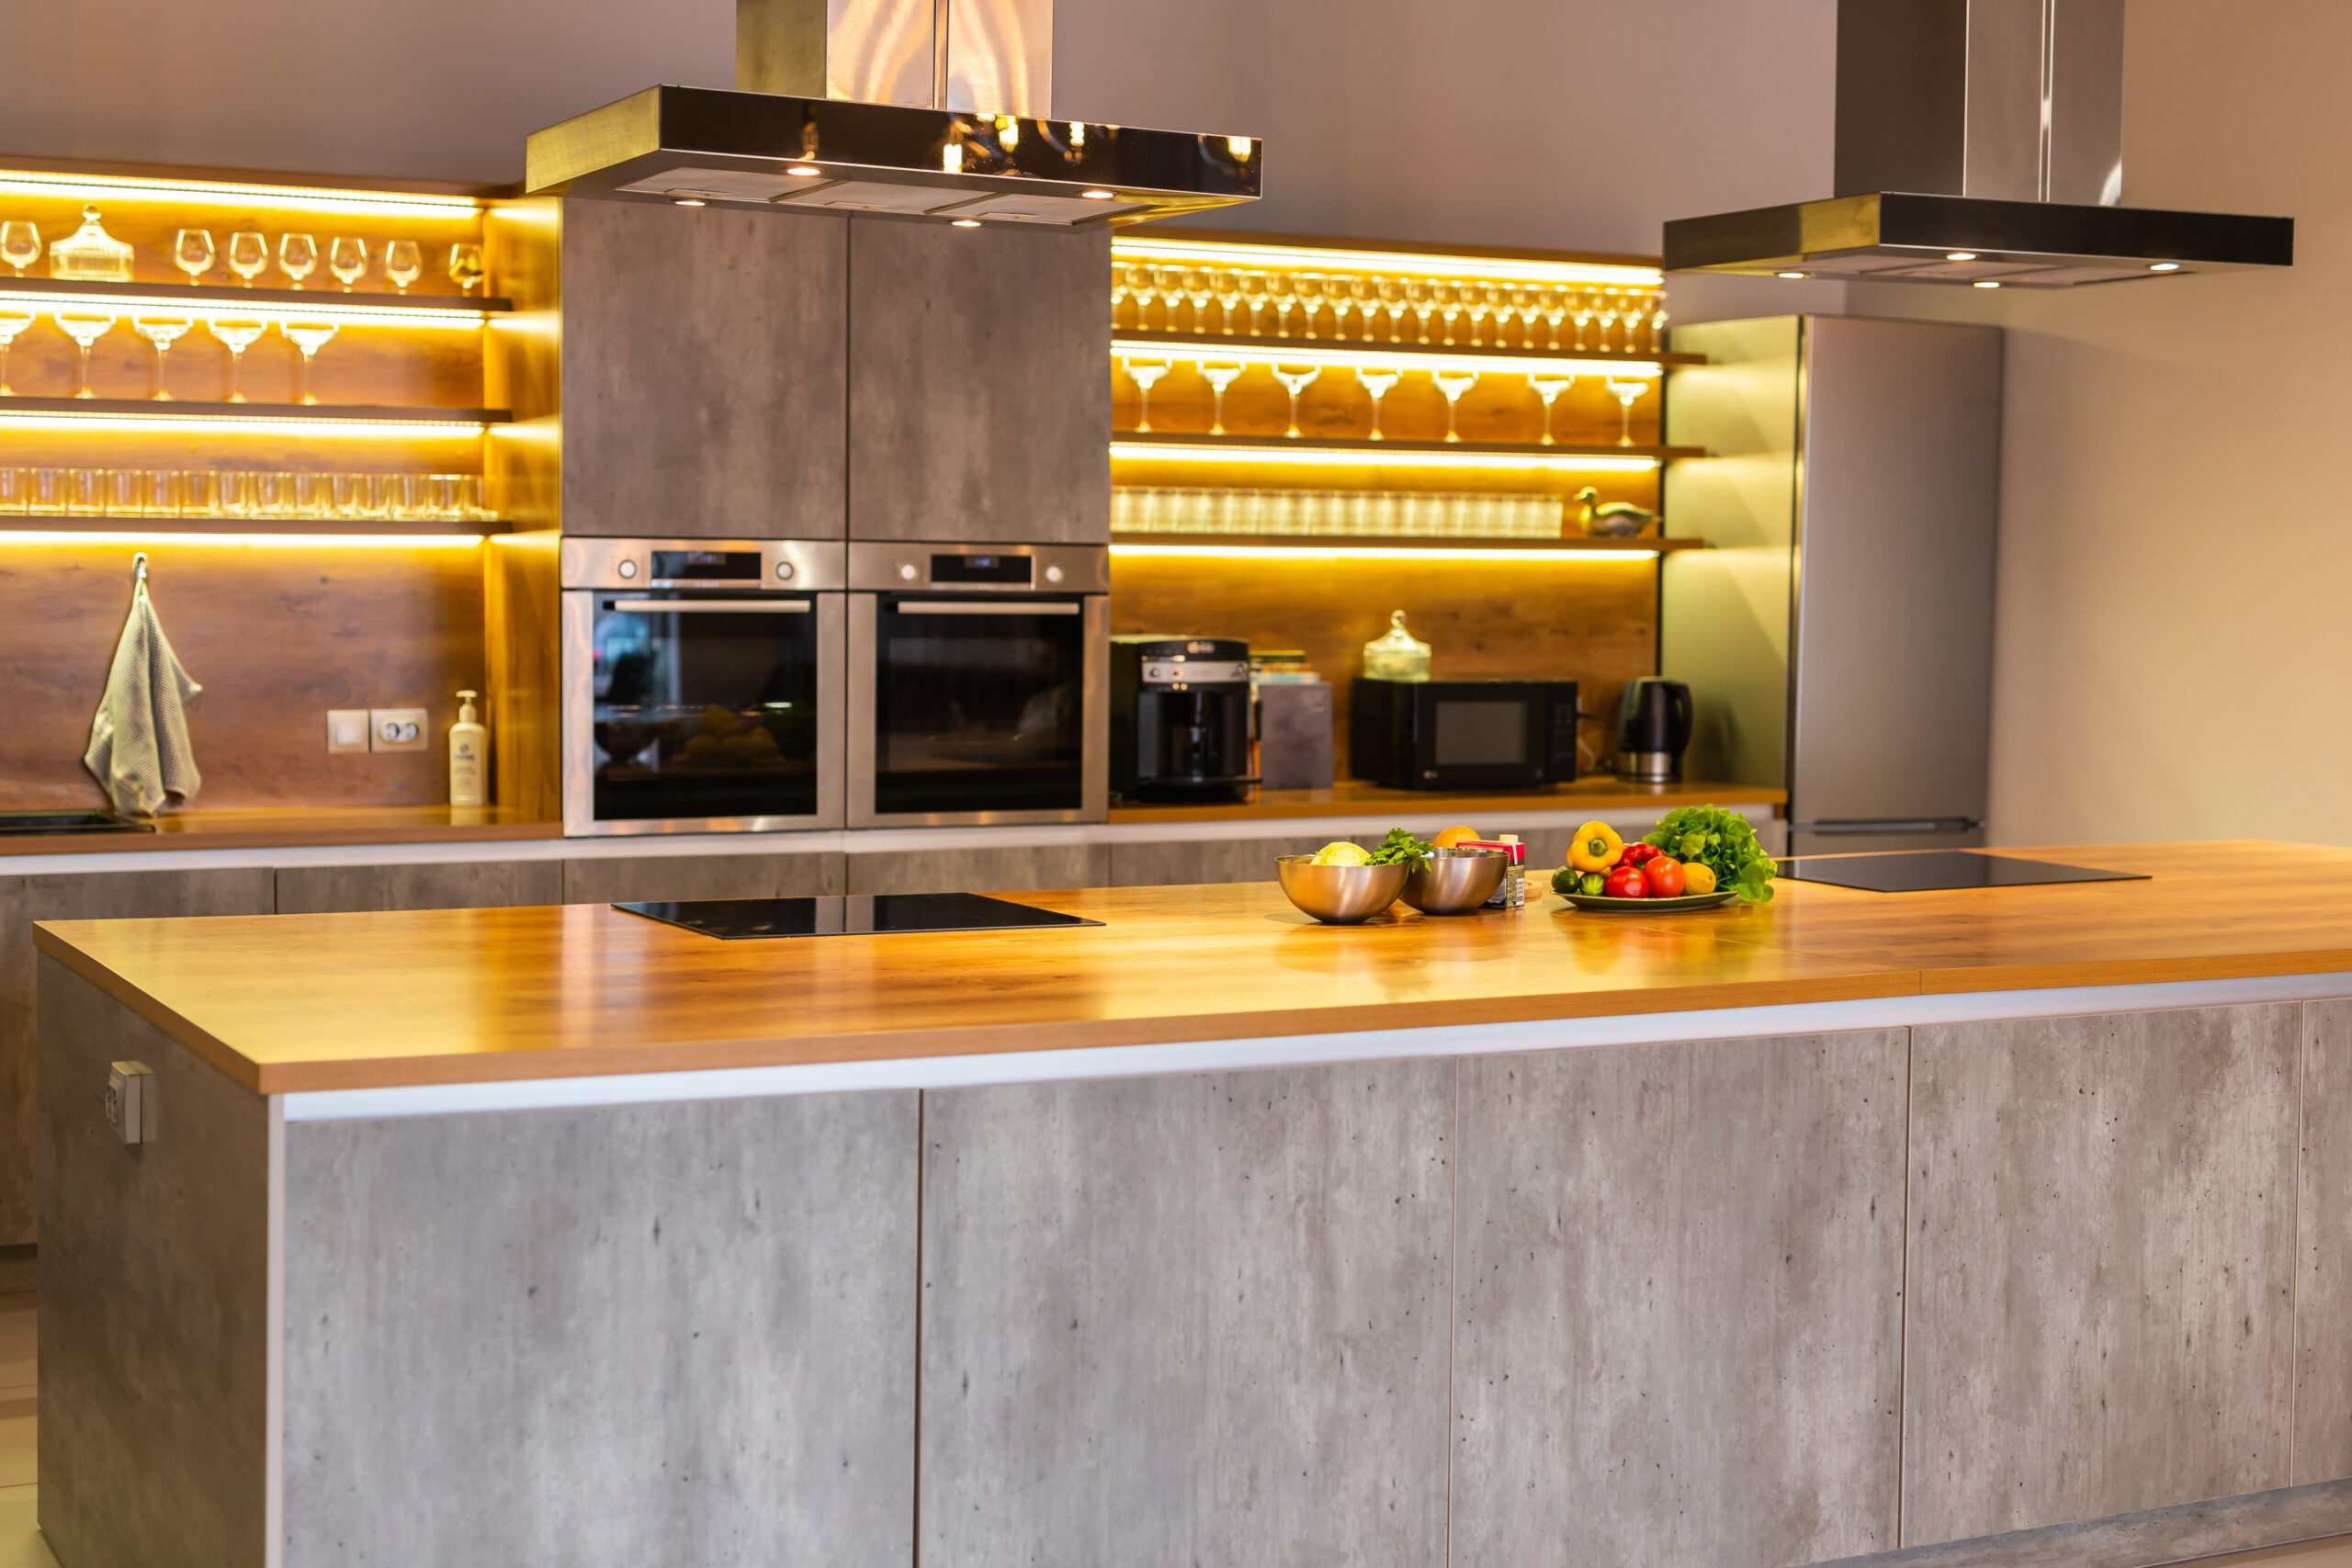 modern minimalism style kitchen in new luxury home 2023 11 27 05 33 16 utc scaled